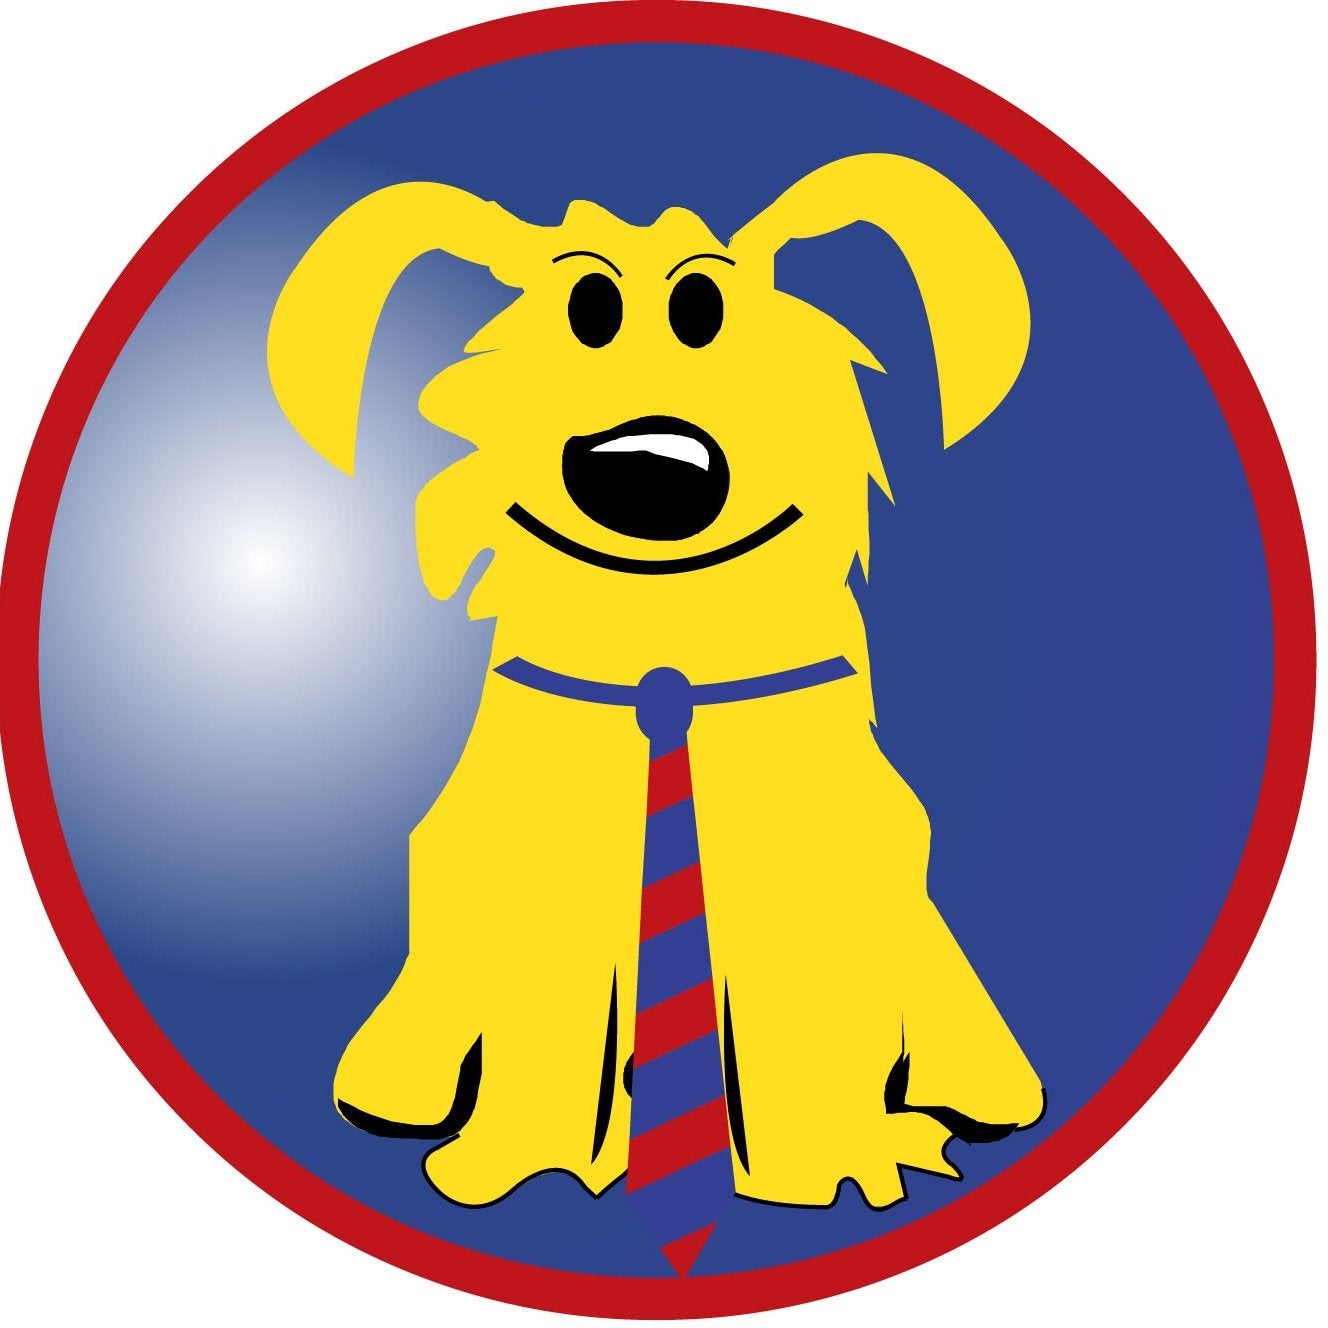 Preppy Pet logo